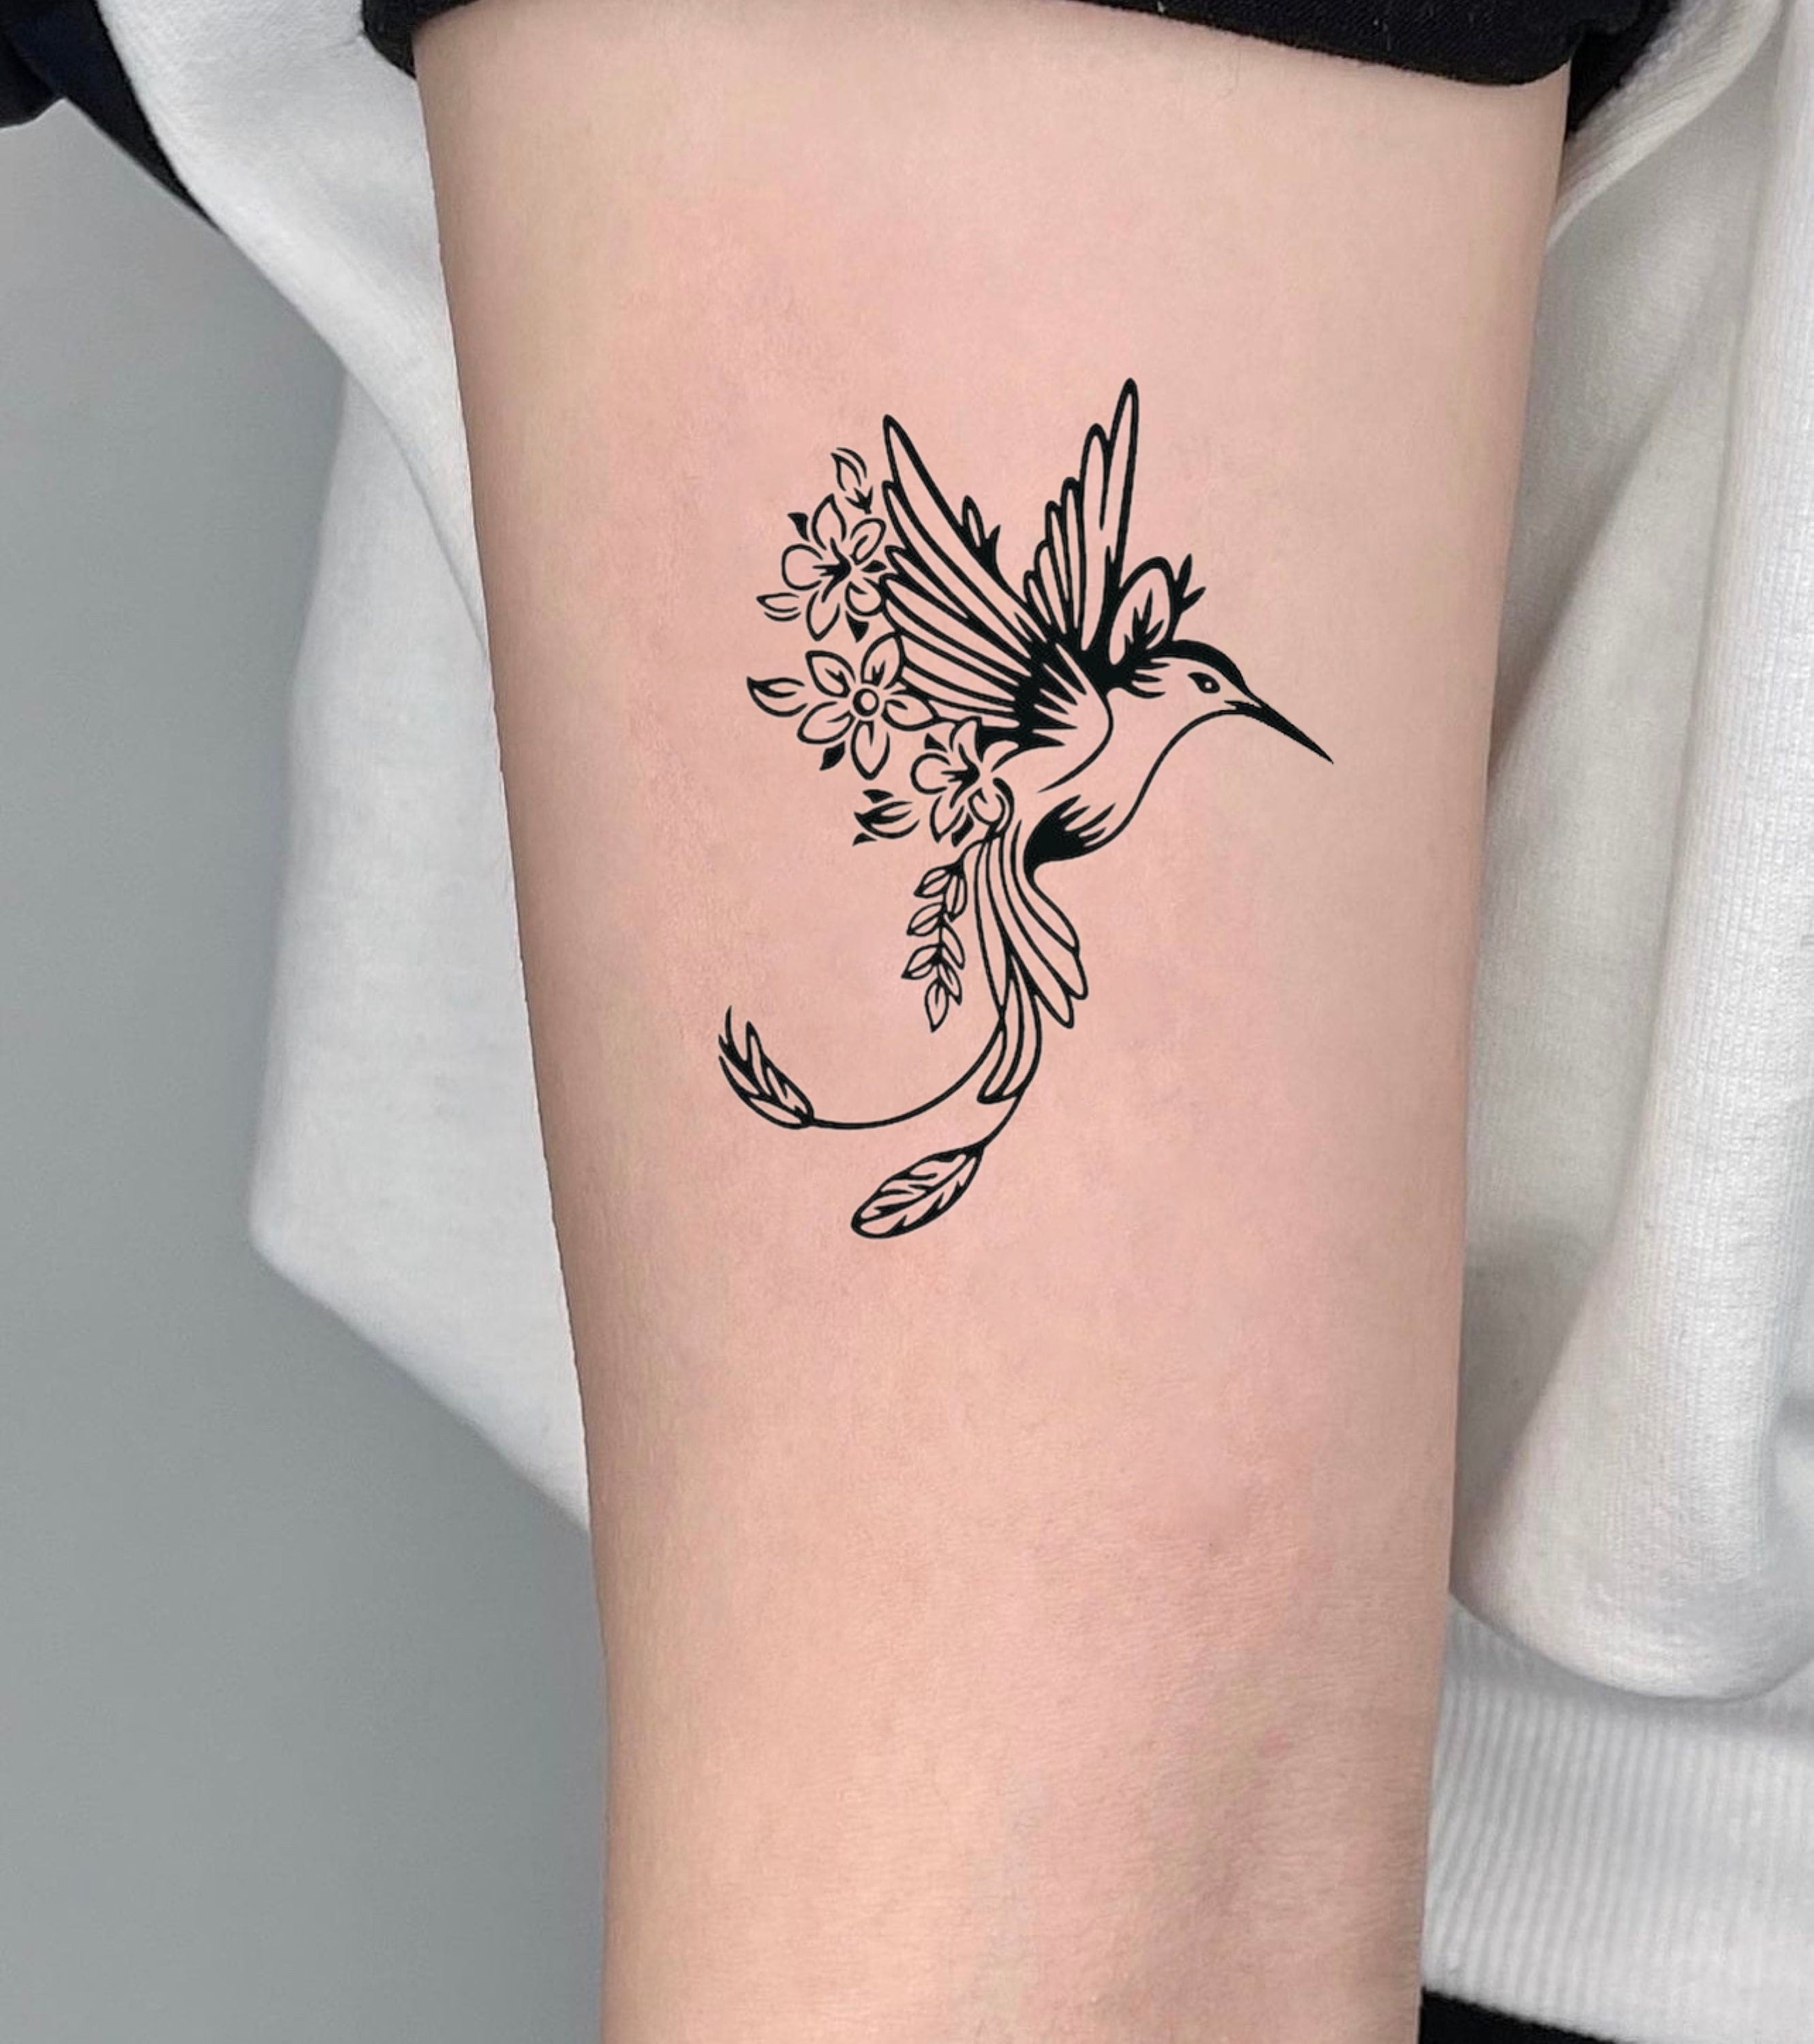 Micro-realistic hummingbird tattoo on the ankle.